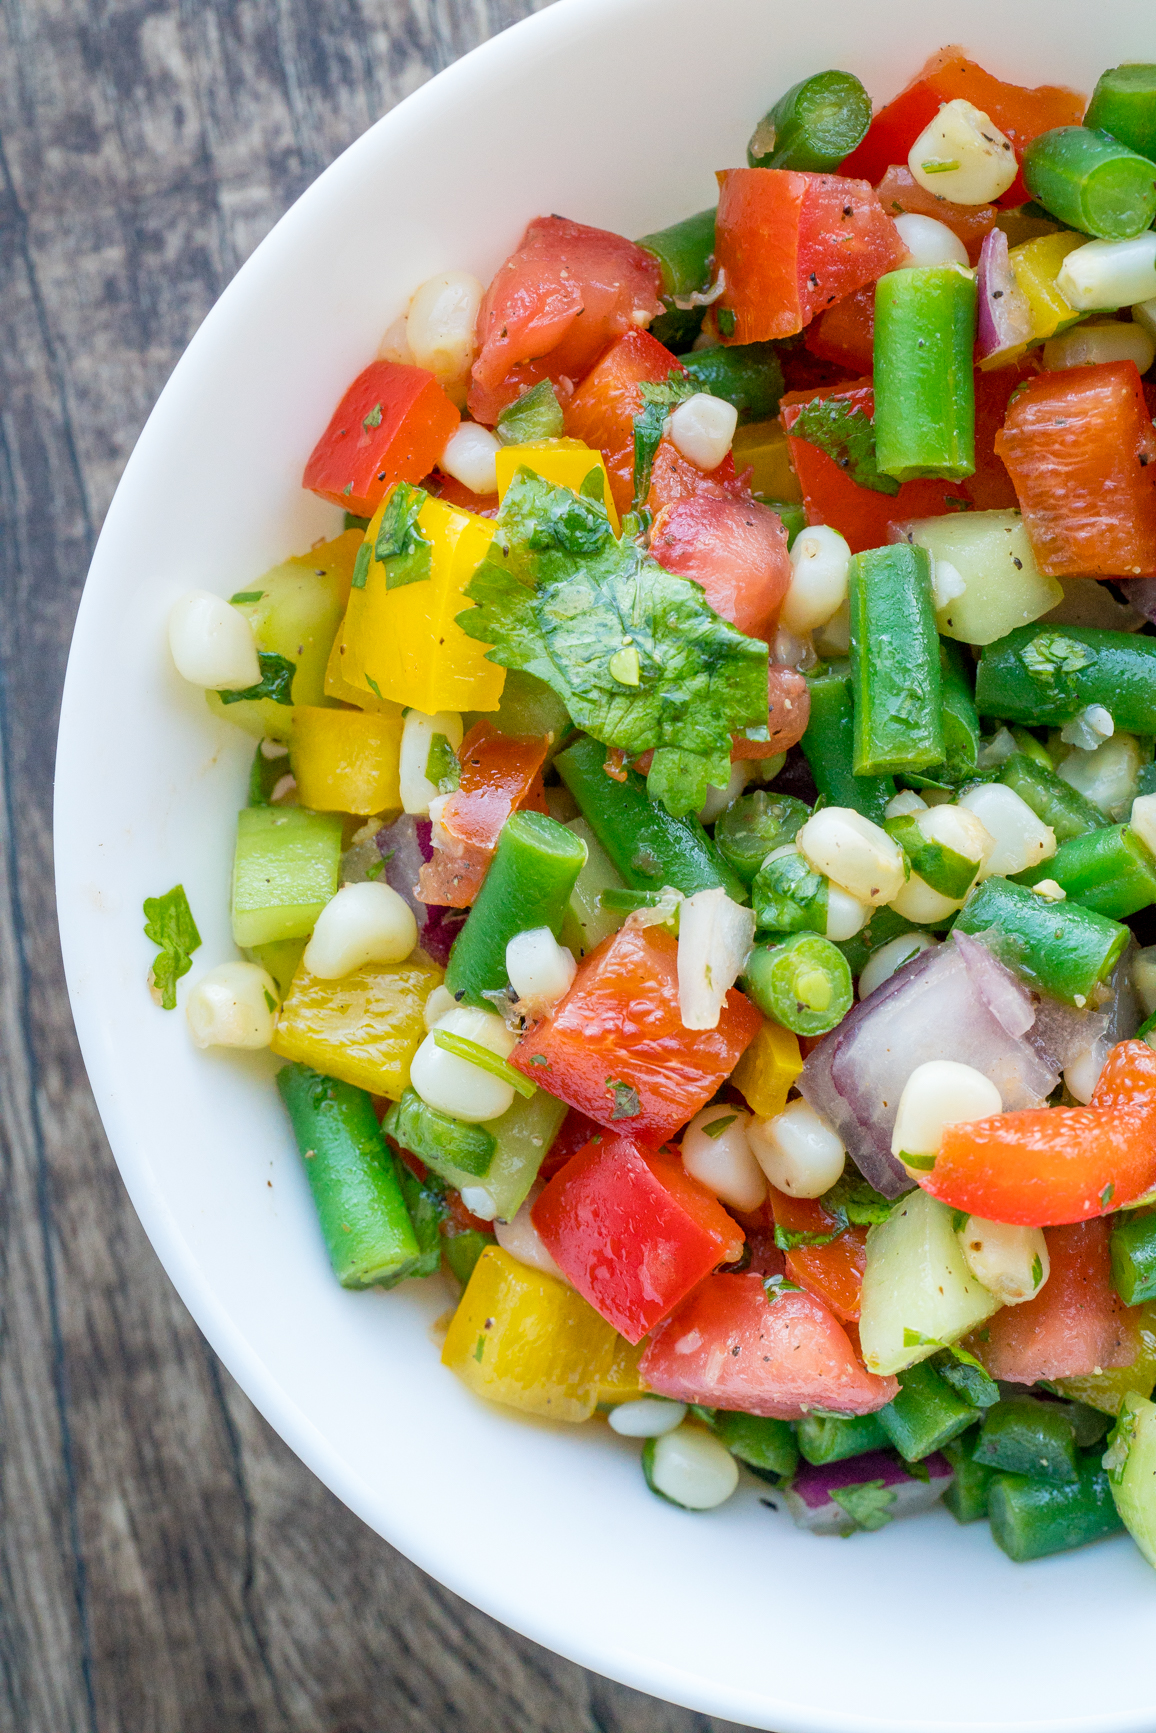 https://cdn.greatlifepublishing.net/wp-content/uploads/sites/2/2019/08/21173431/Martha-Stewarts-Chopped-Vegetable-Salad-6.jpg